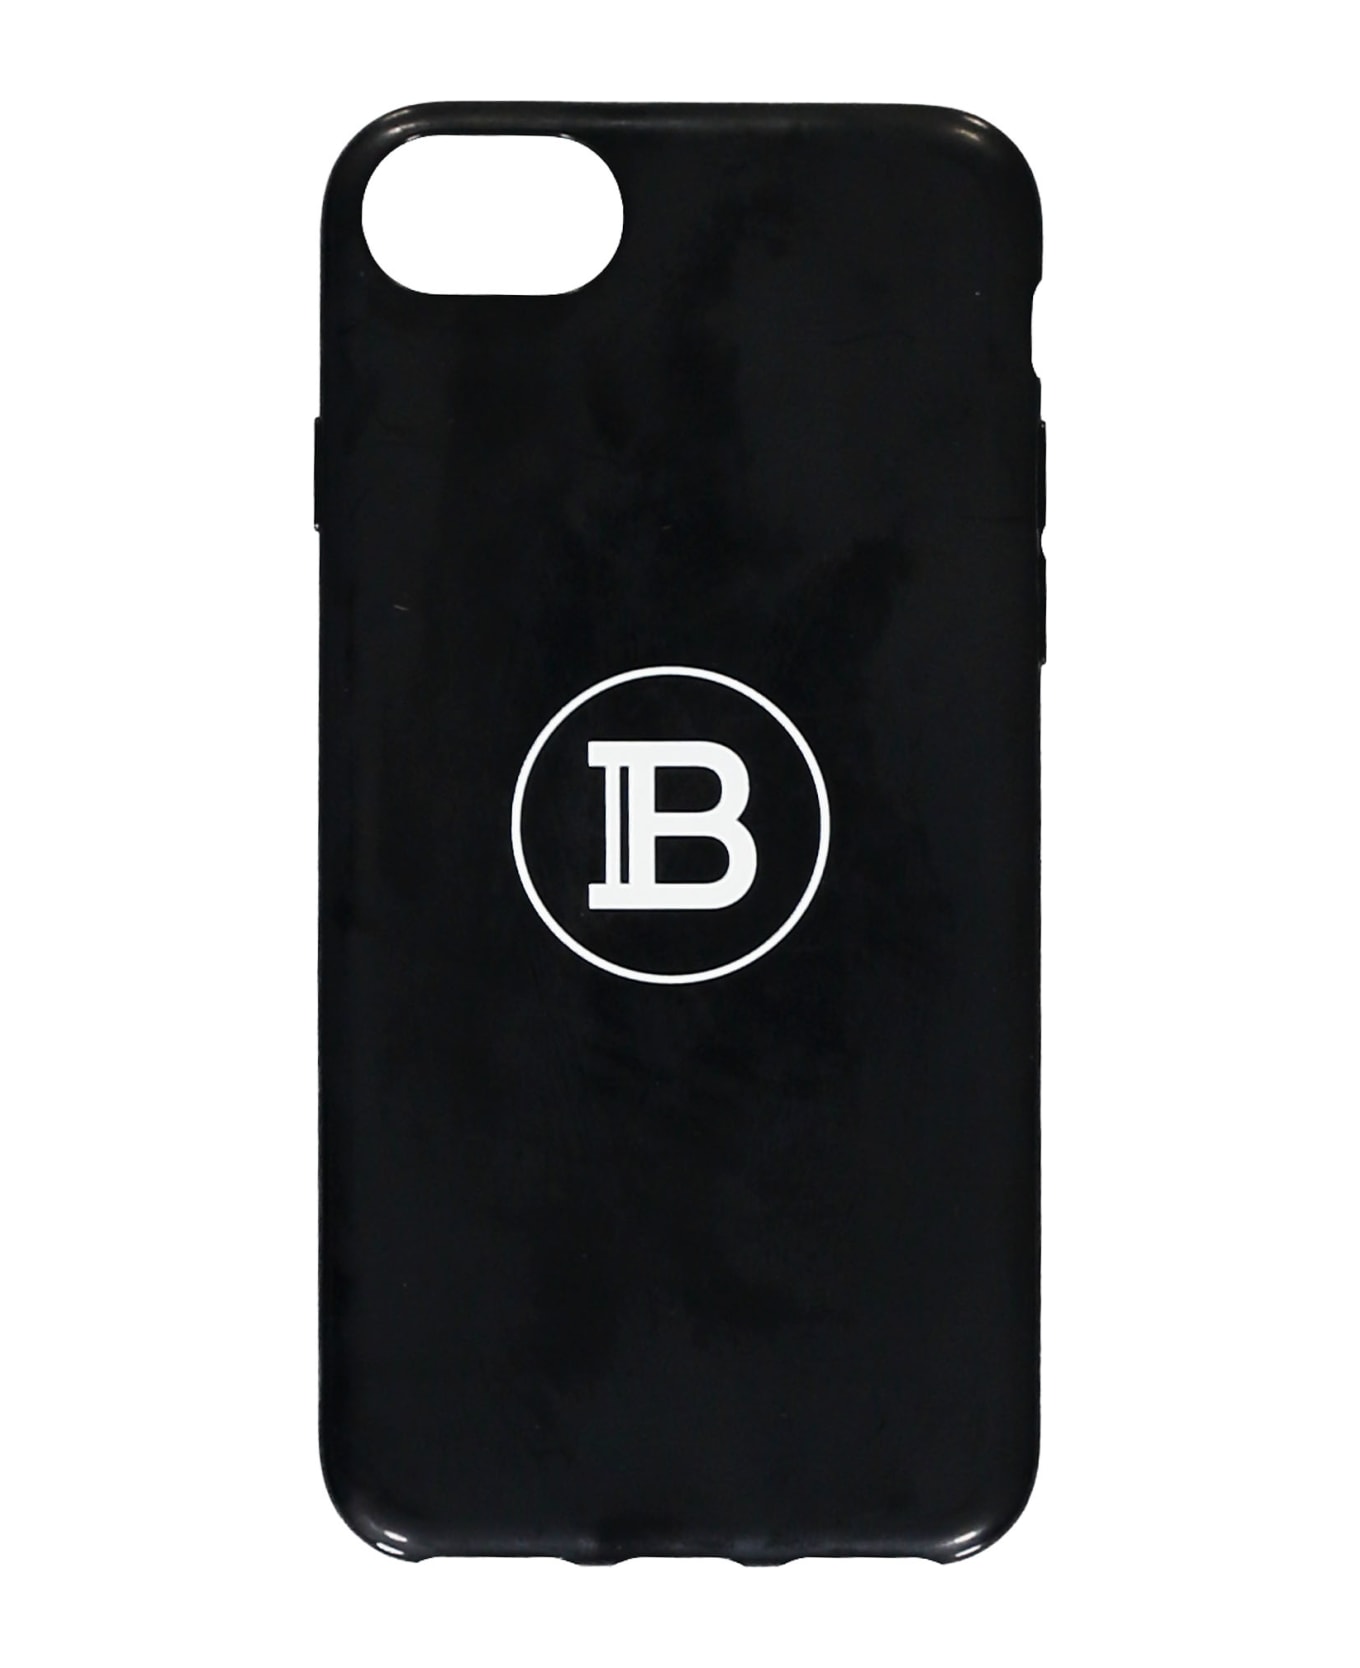 Balmain Iphone Case - black